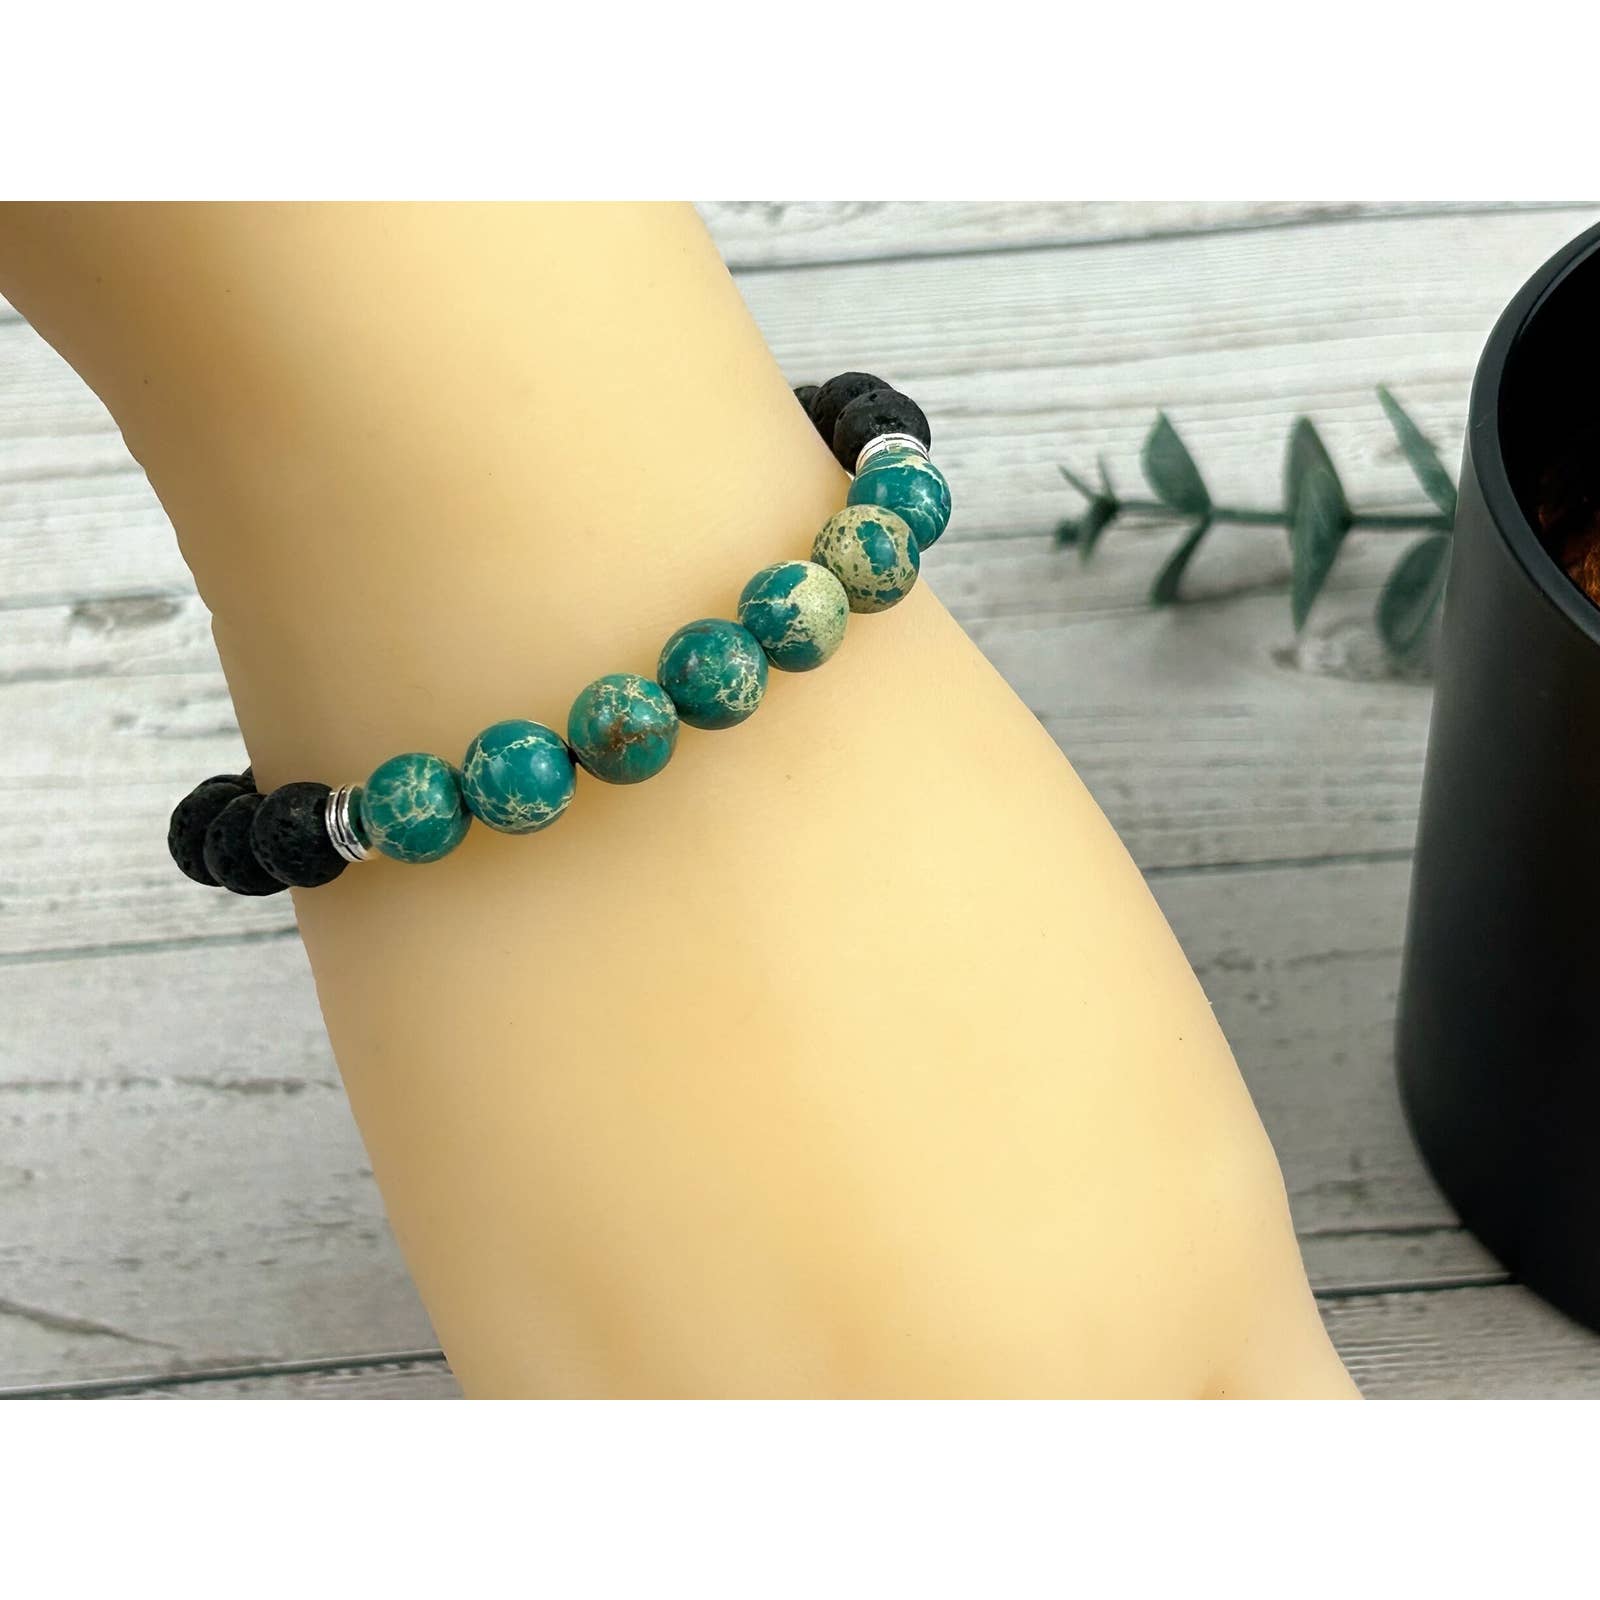 Essential Oil Bracelet - Teal Green Imperial Jasper Bracelet with Lava Beads